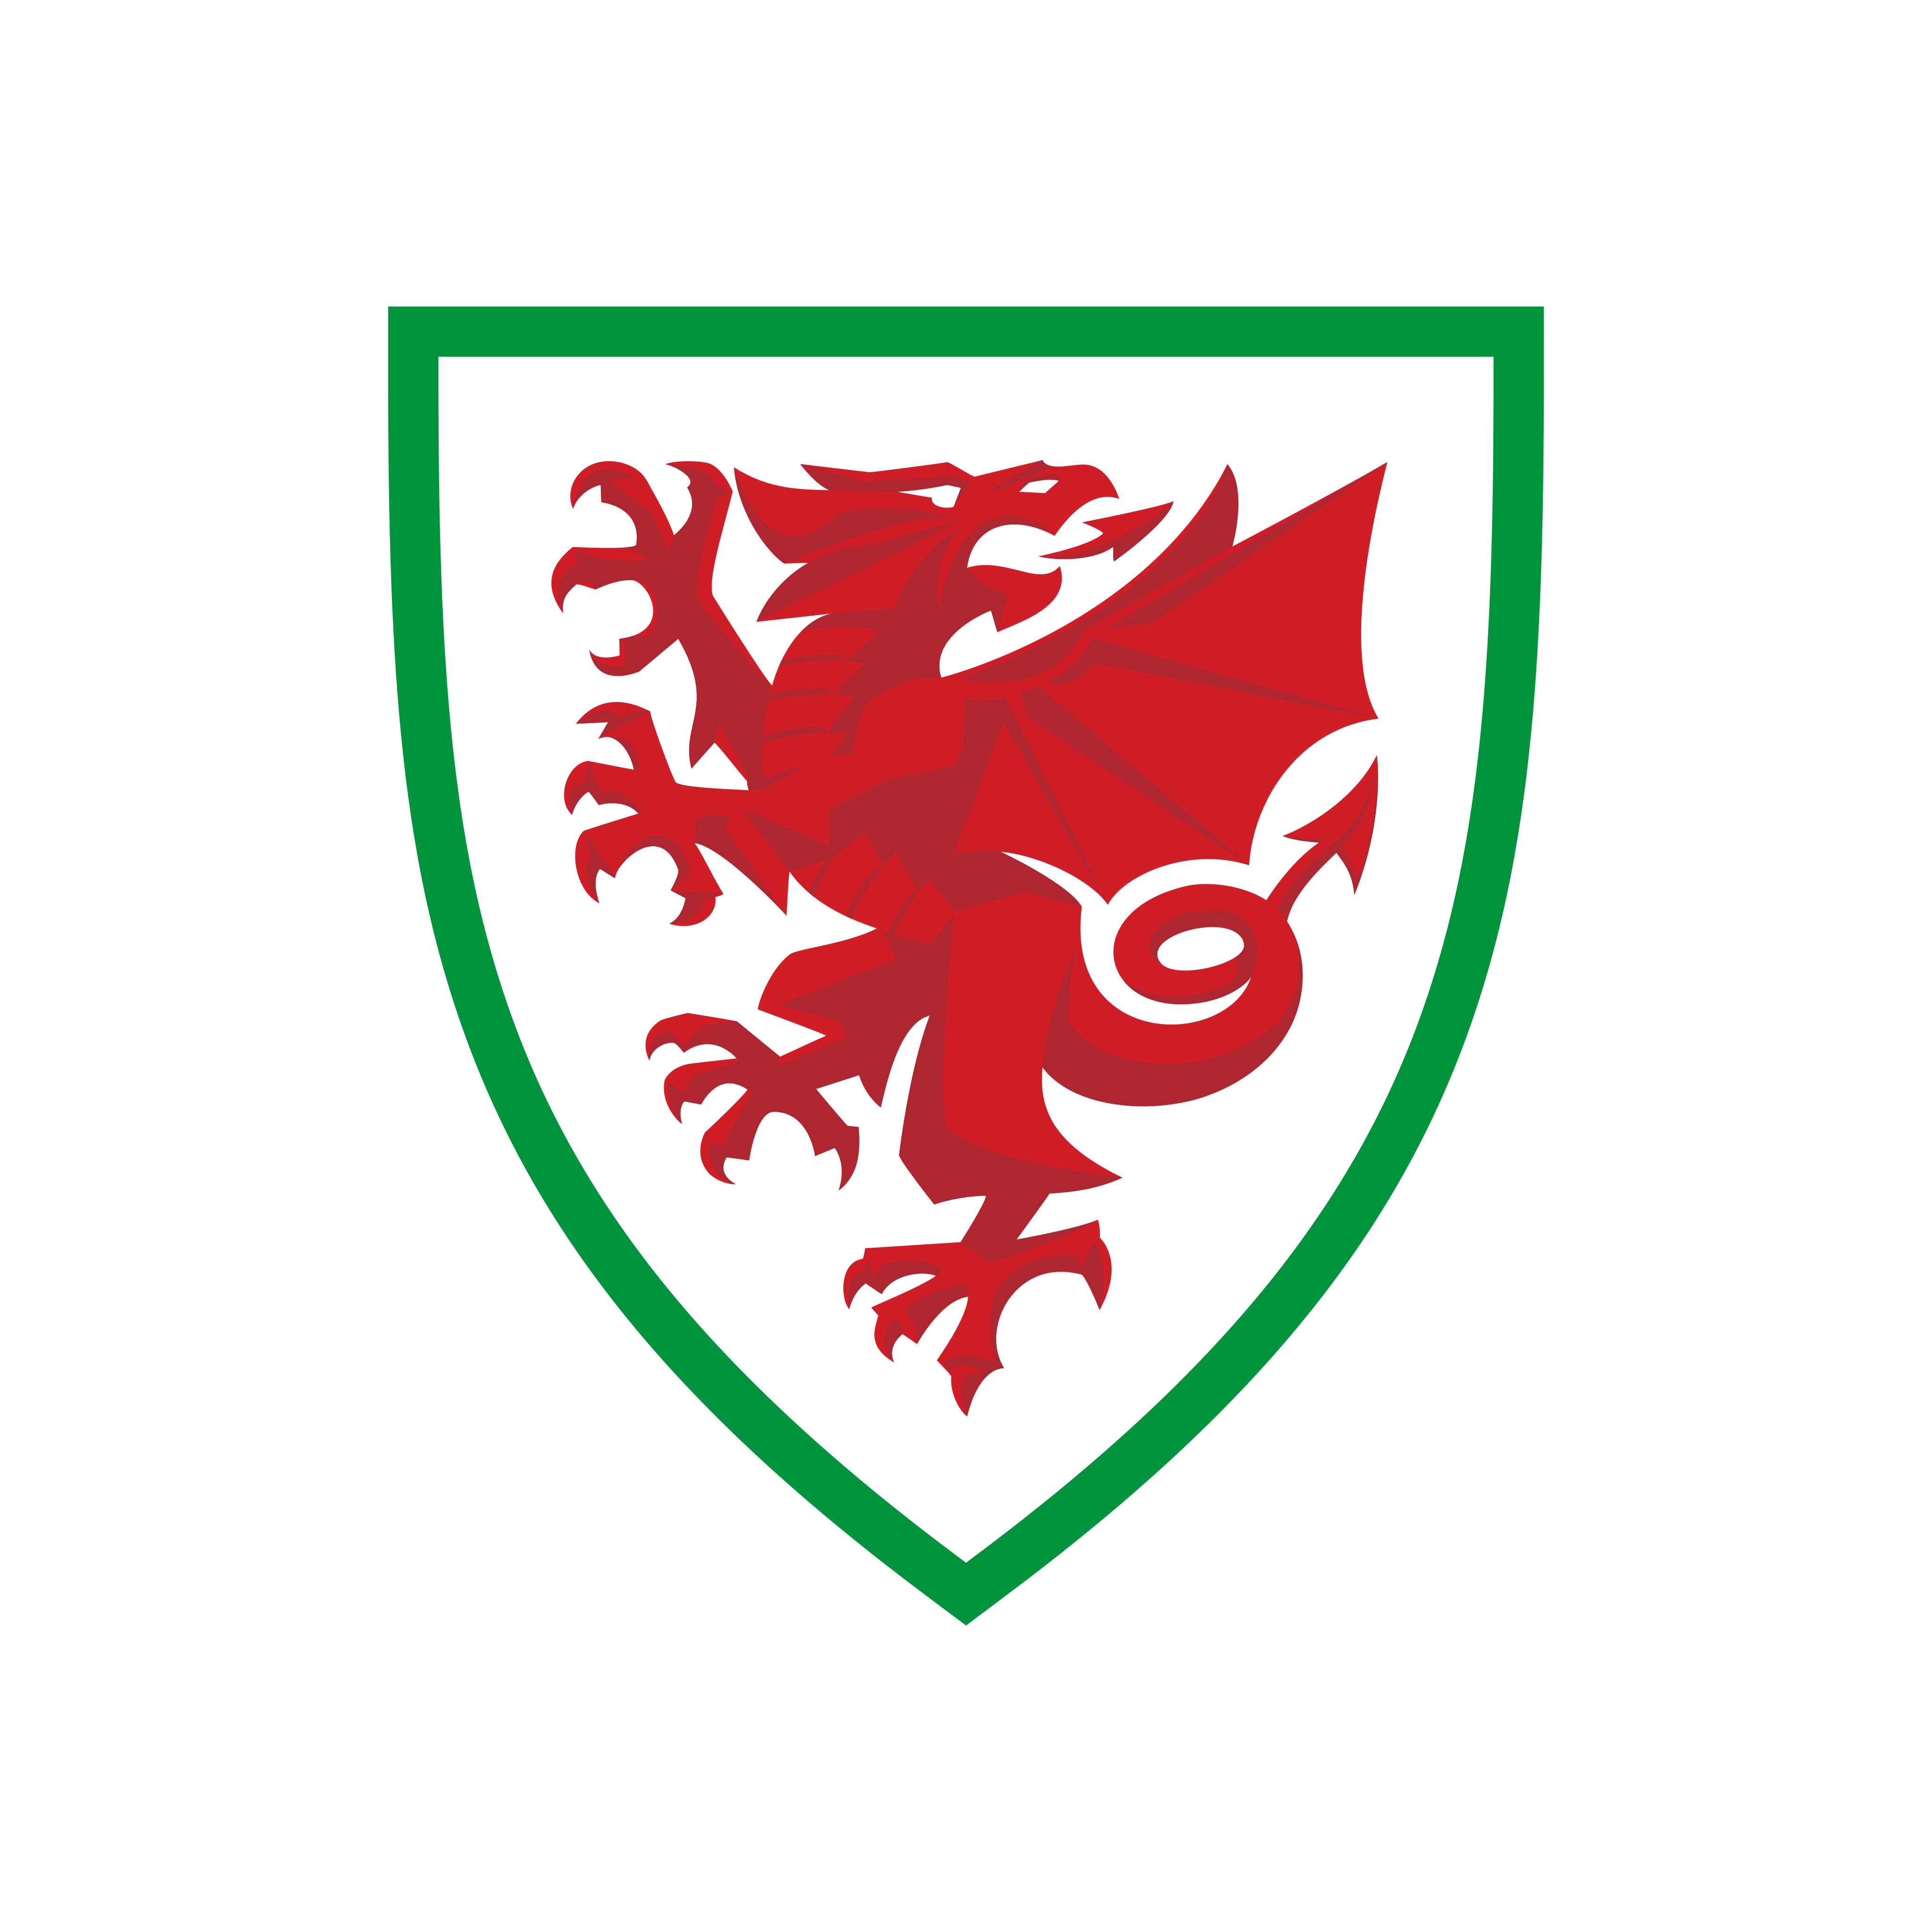 wales national football team logo 0 - Wales National Football Team Logo